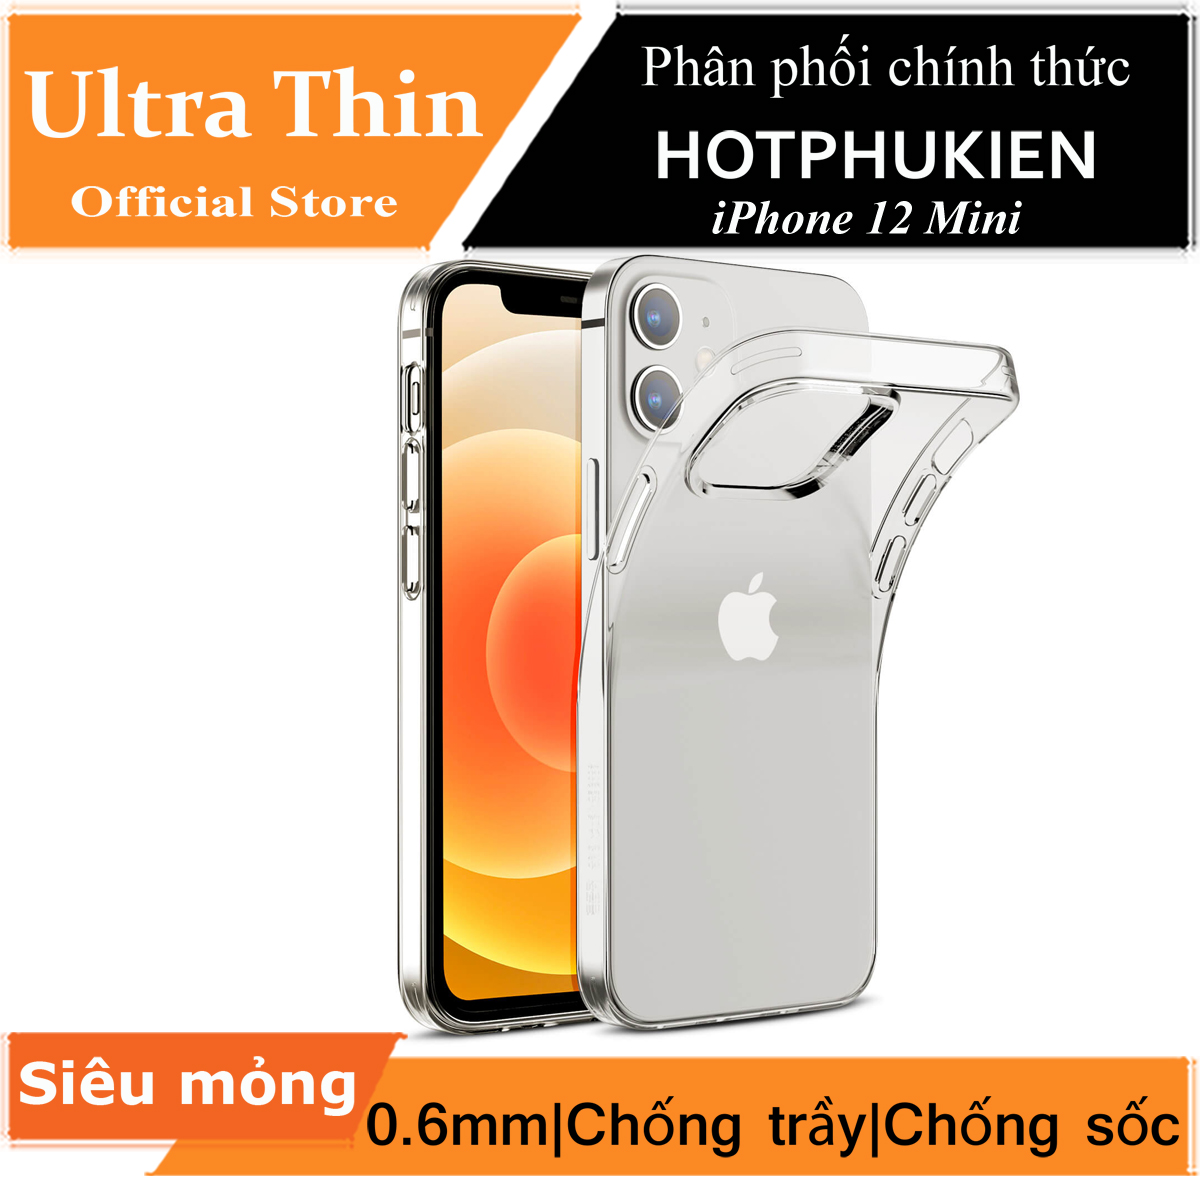 Ốp lưng dẻo silicon trong suốt cho iPhone 12 Mini hiệu Ultra Thin